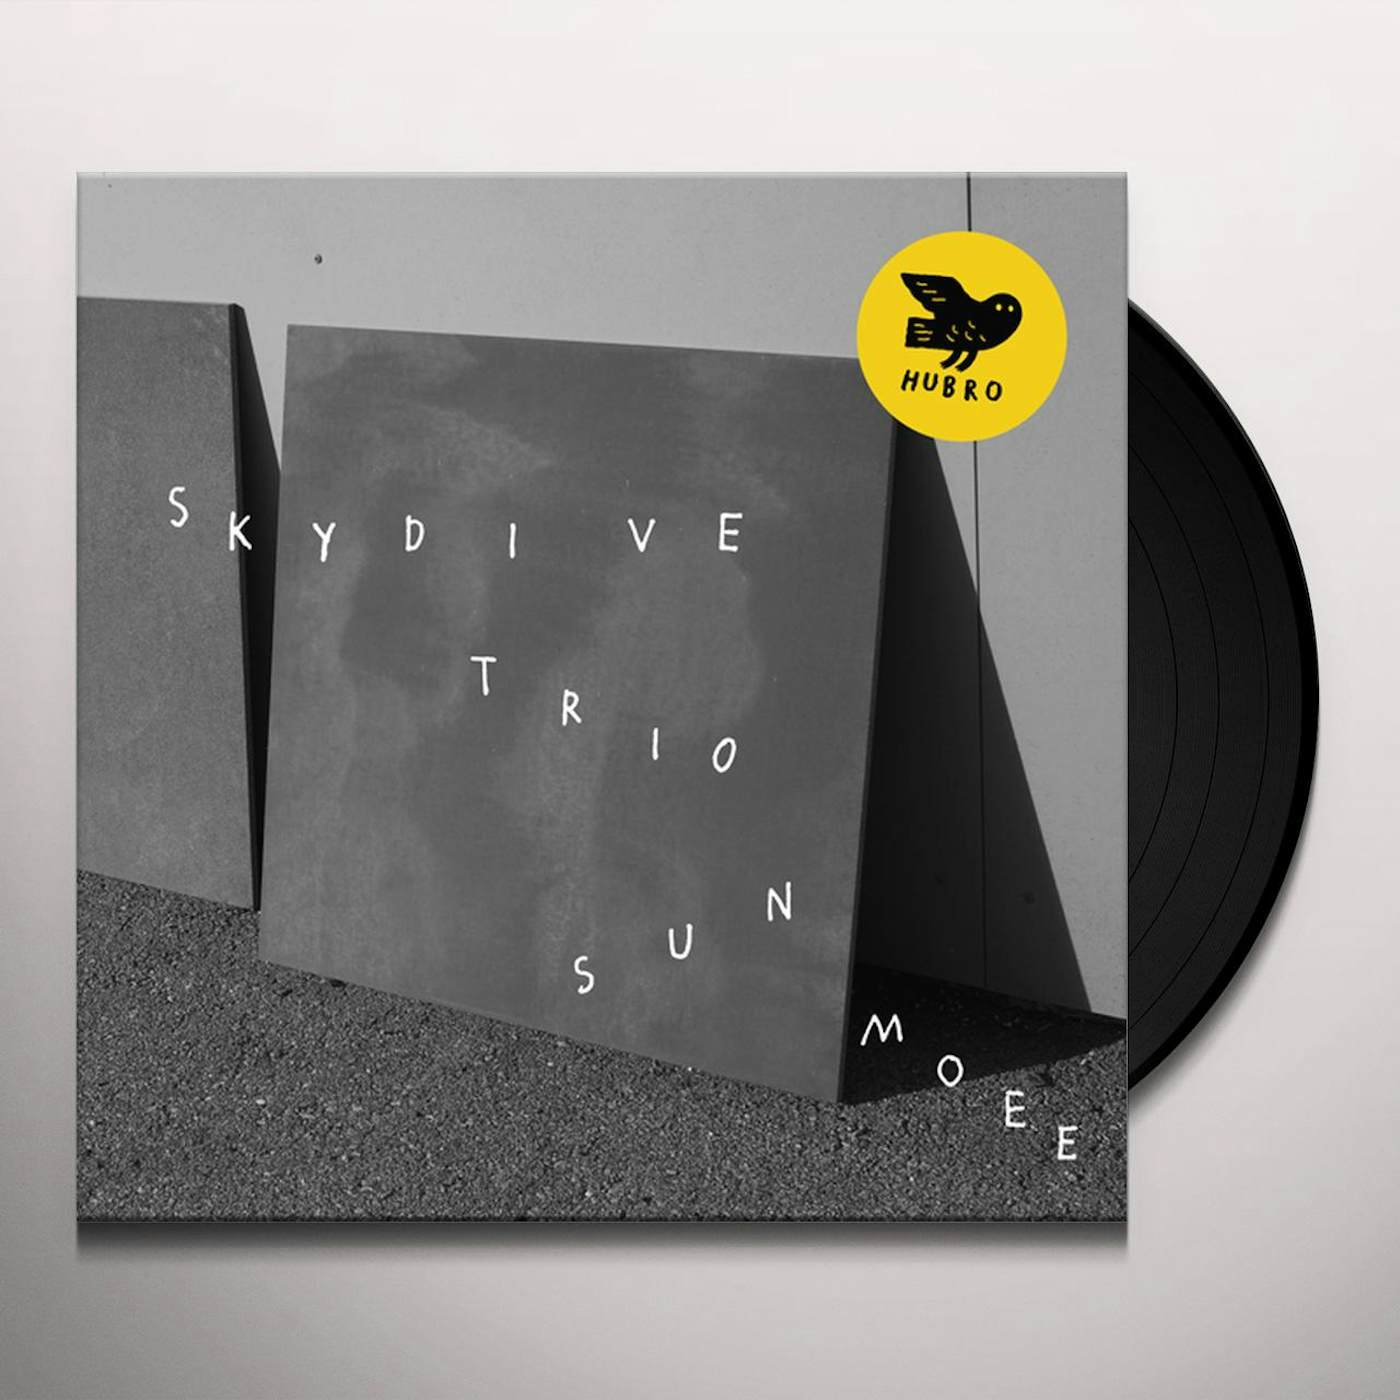 Skydive Trio Sun Moee Vinyl Record